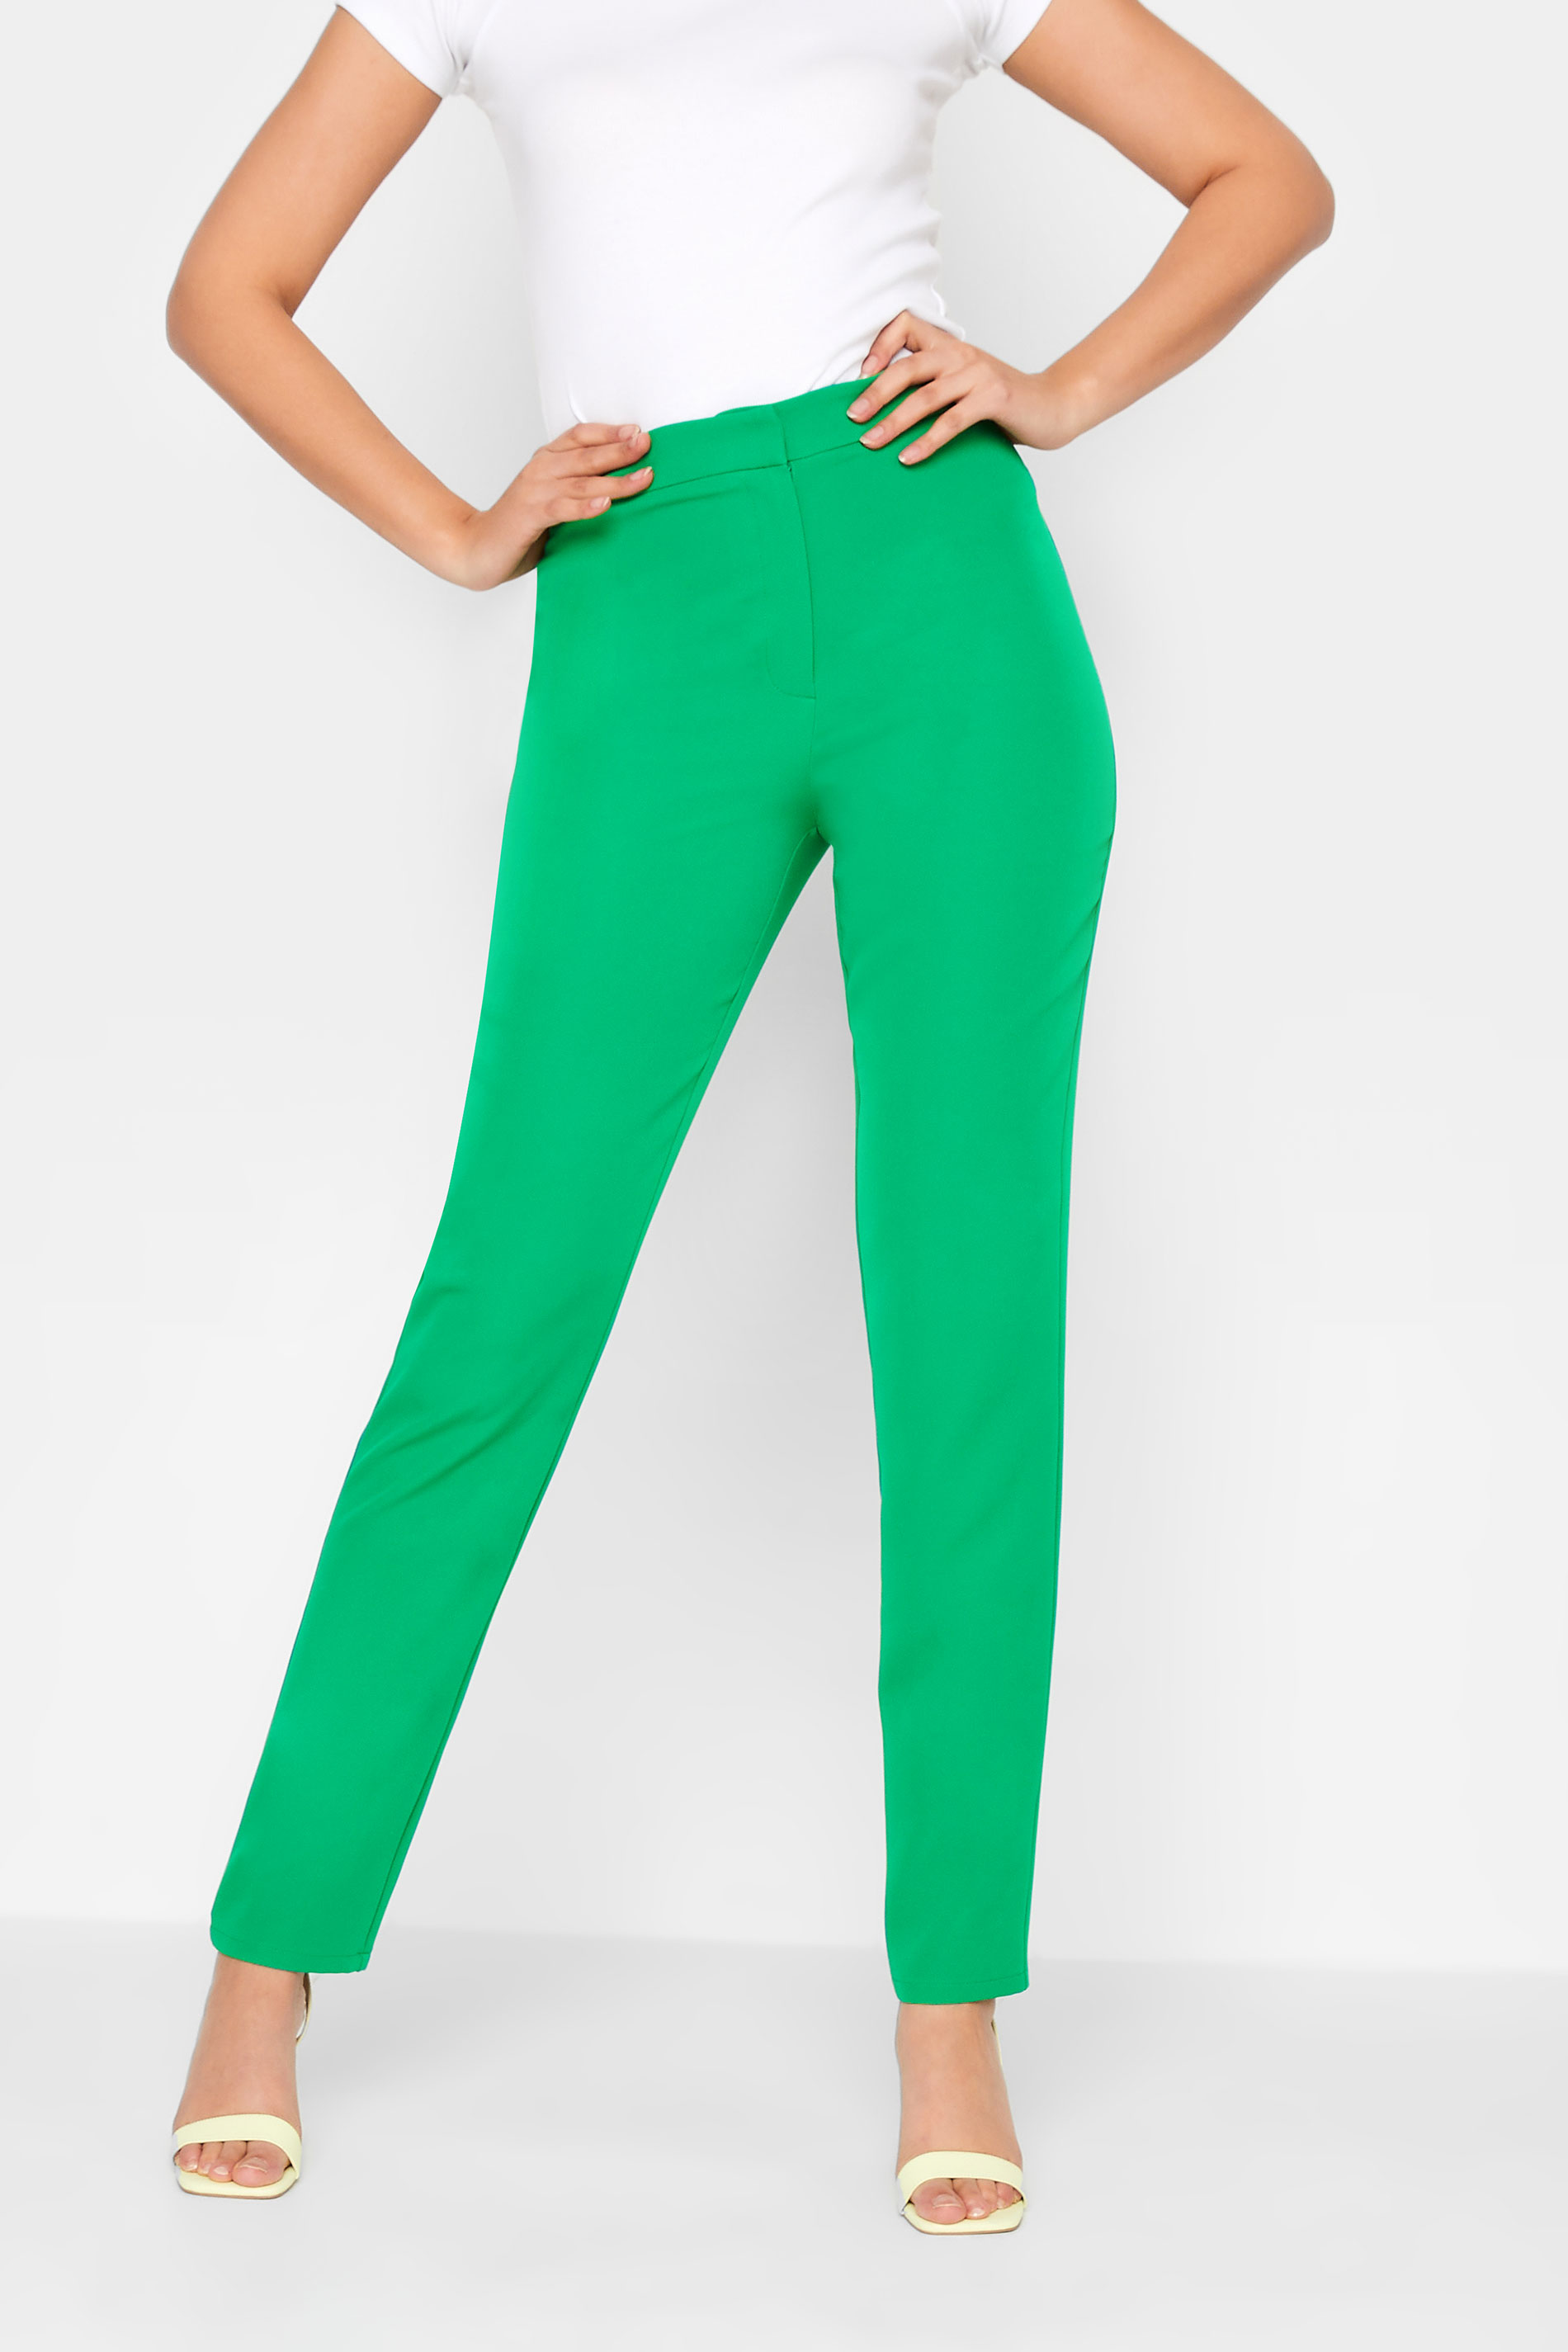 LTS Tall Women's Green Slim Leg Trousers | Long Tall Sally 1